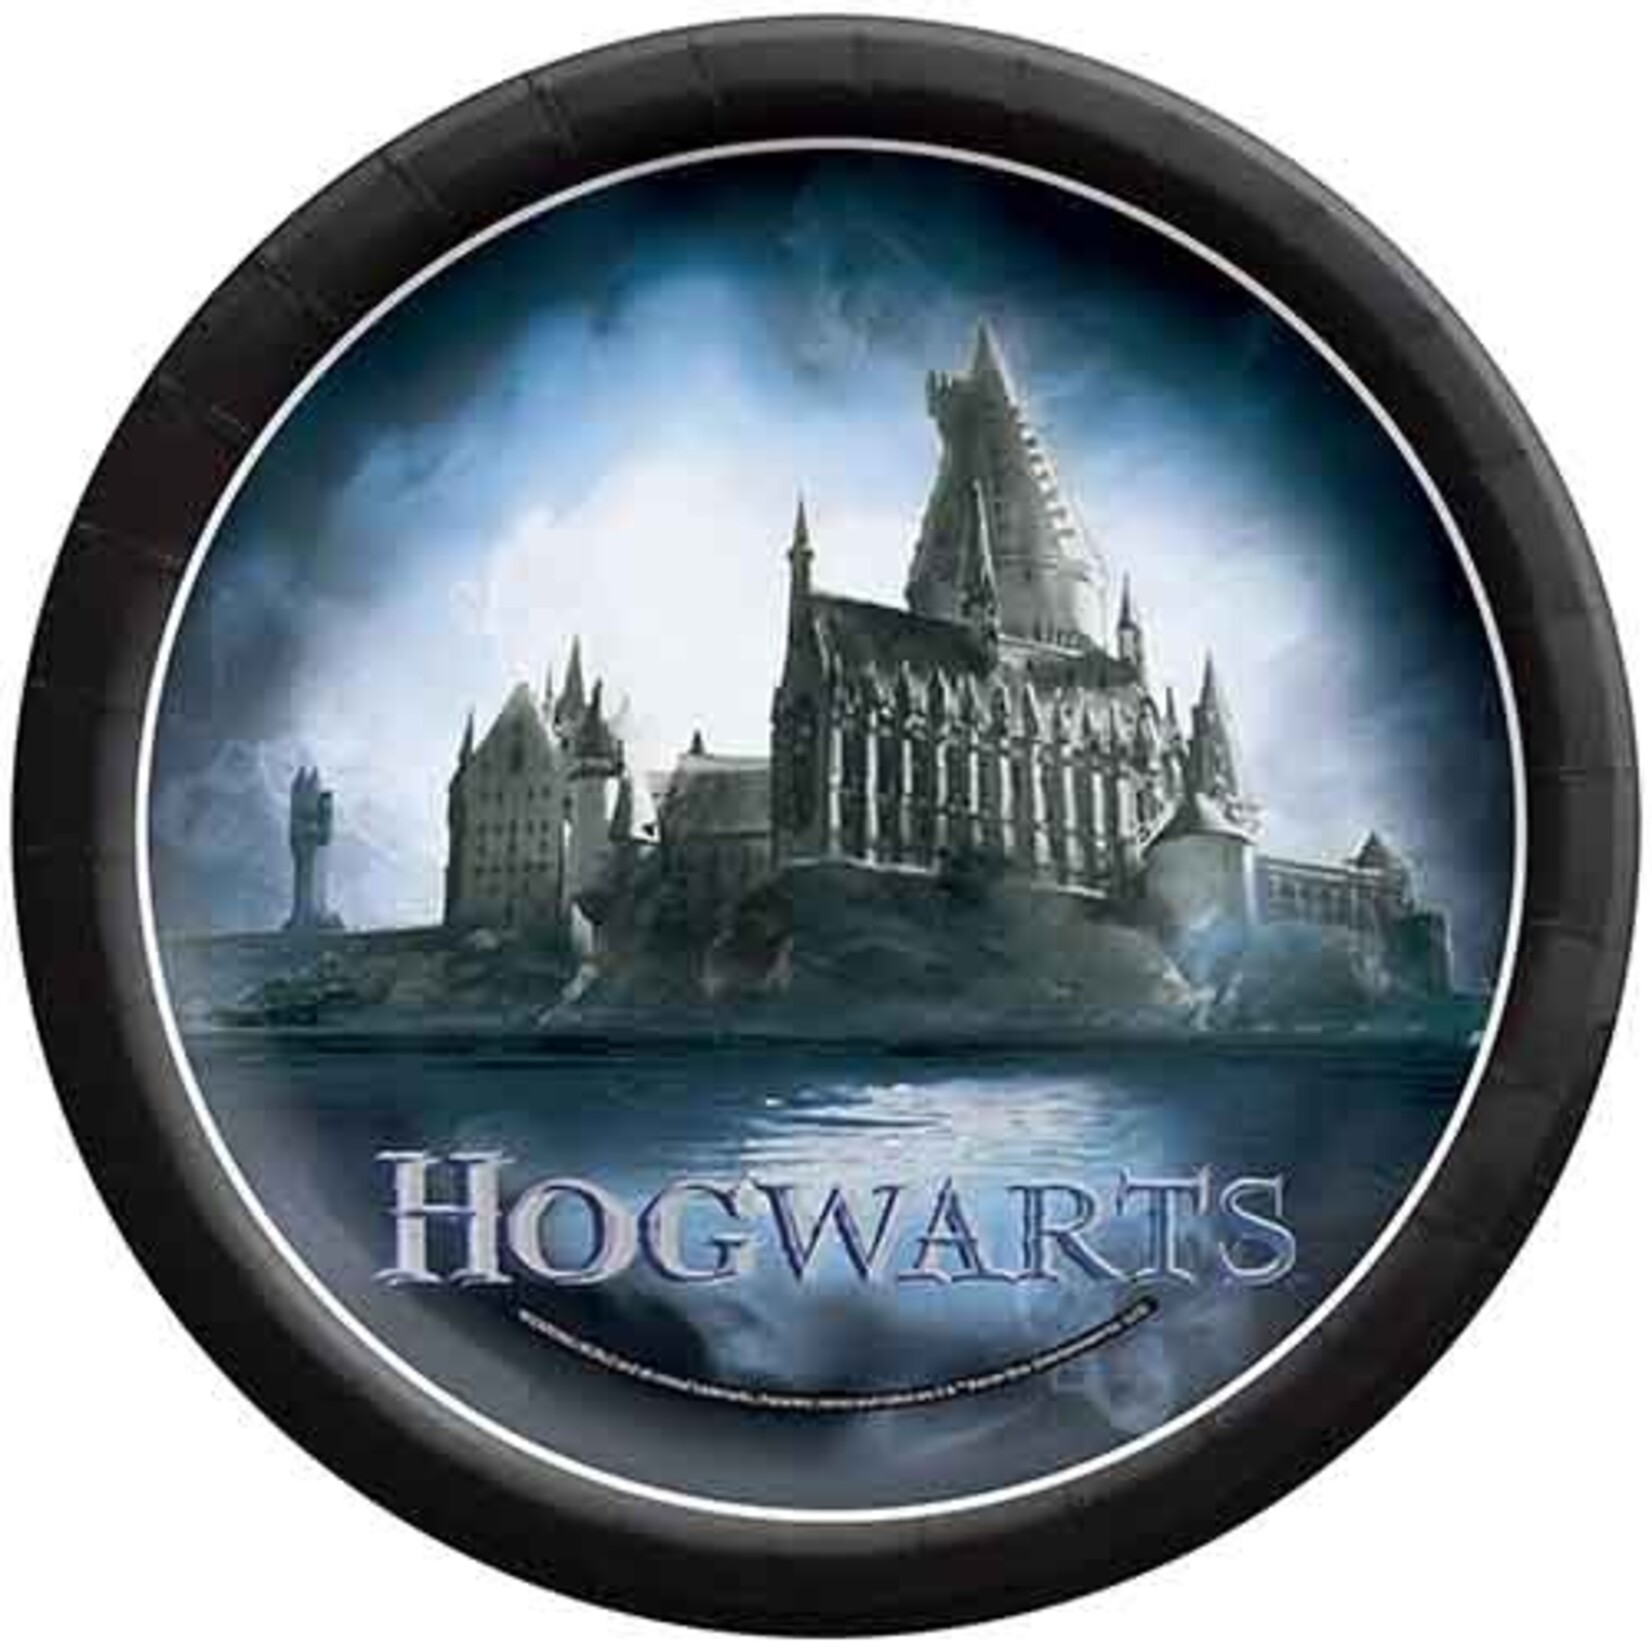 Hogwarts Harry Potter Plates and Napkins